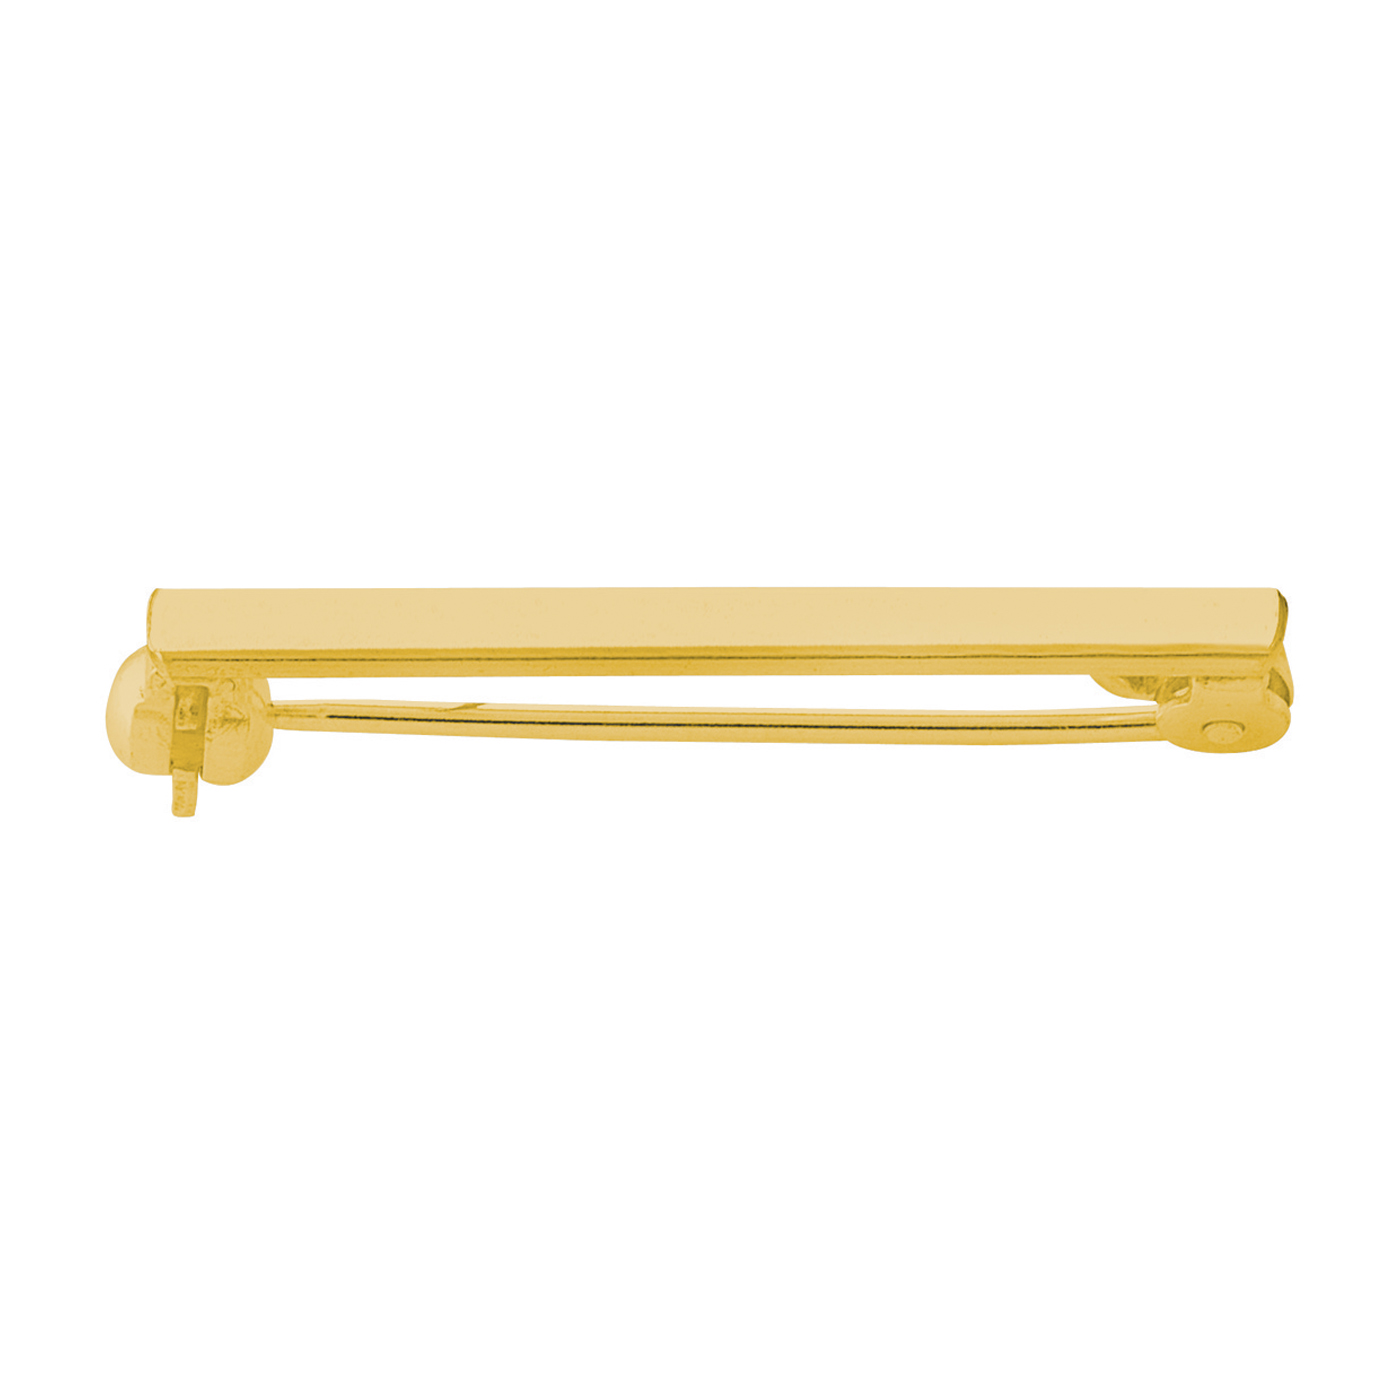 Brooch Mechanism, Rolled Gold, 30 mm - 1 piece